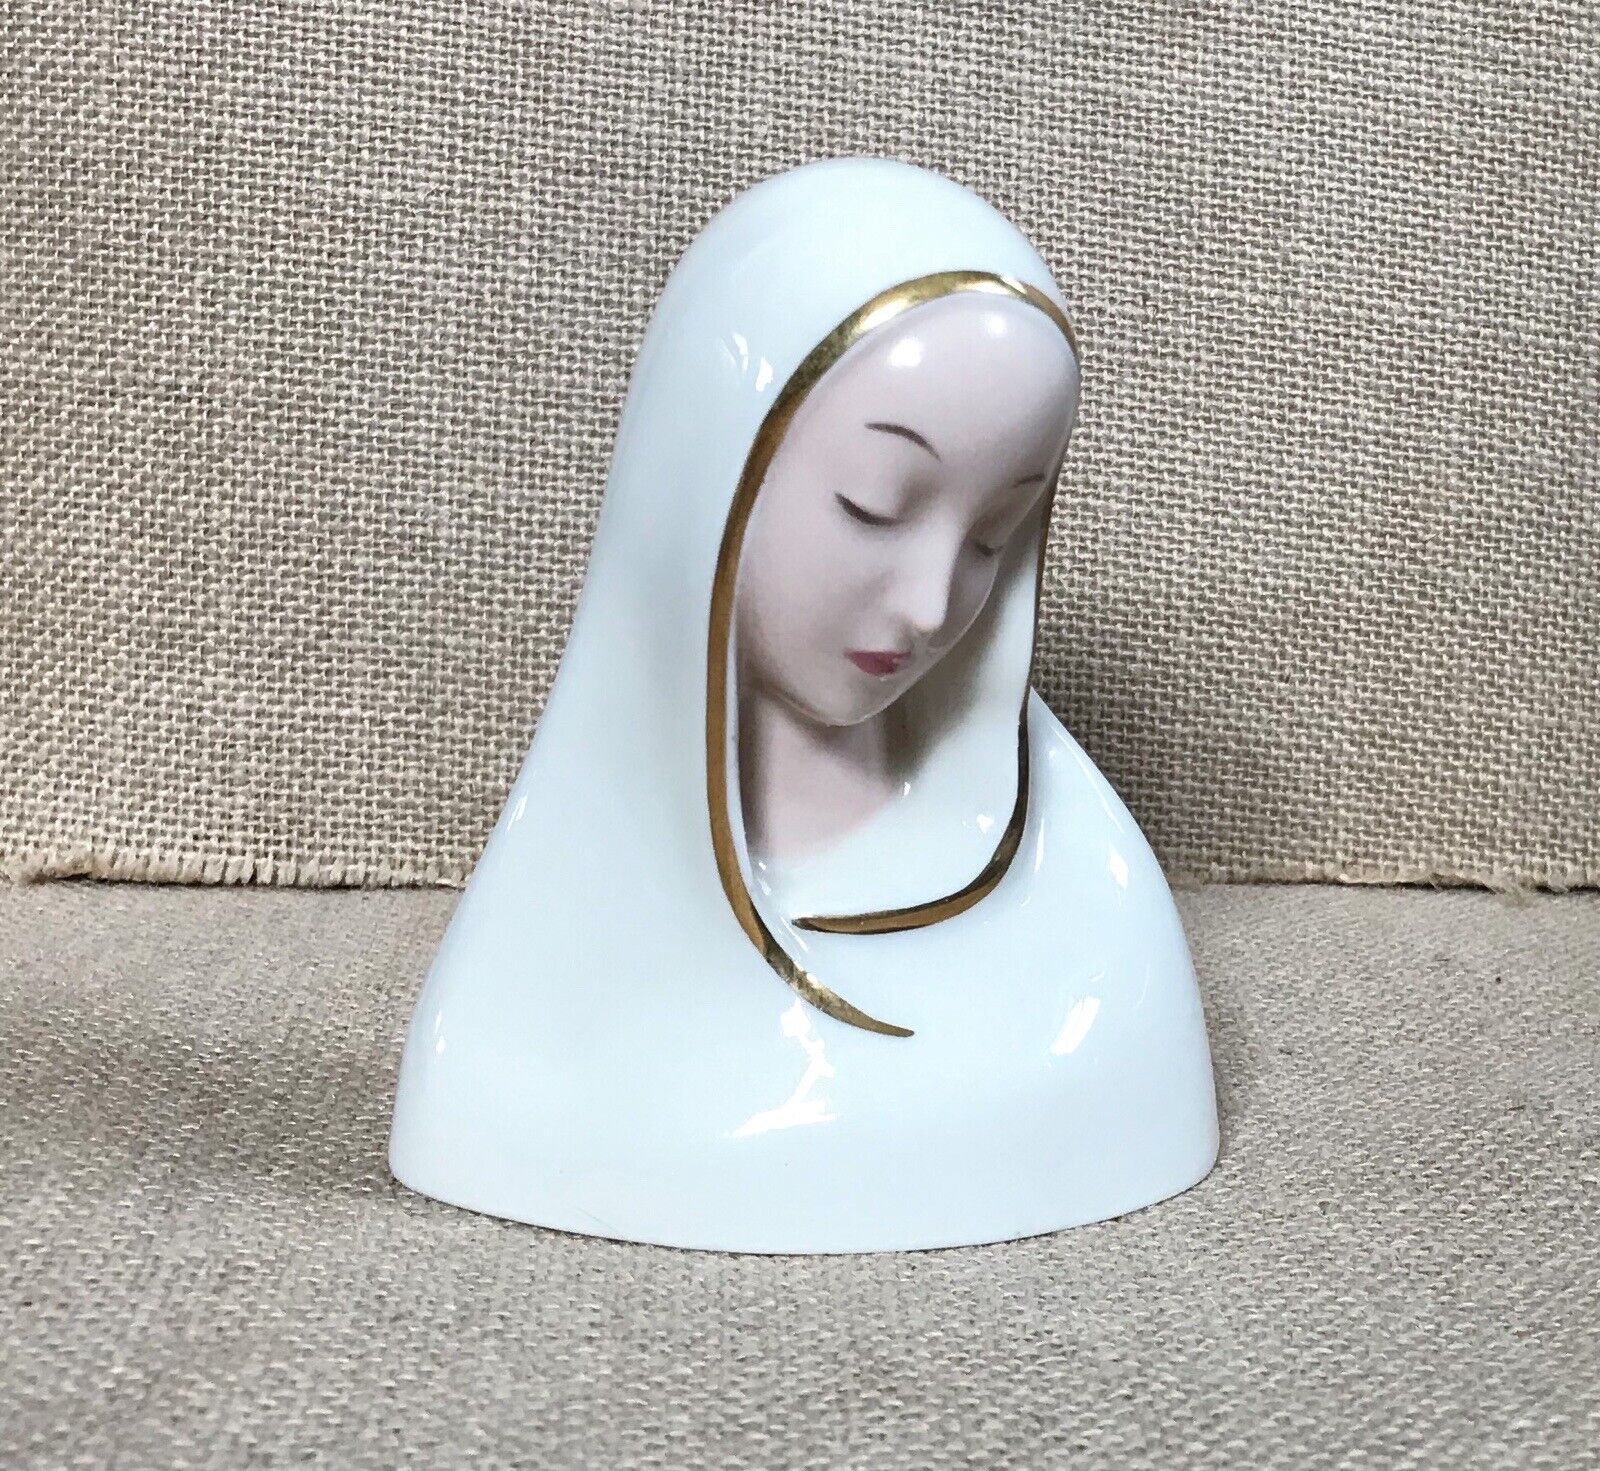 DA Prato Co Hoboken NJ Porcelain Madonna Bust Figurine Virgin Mary Catholic